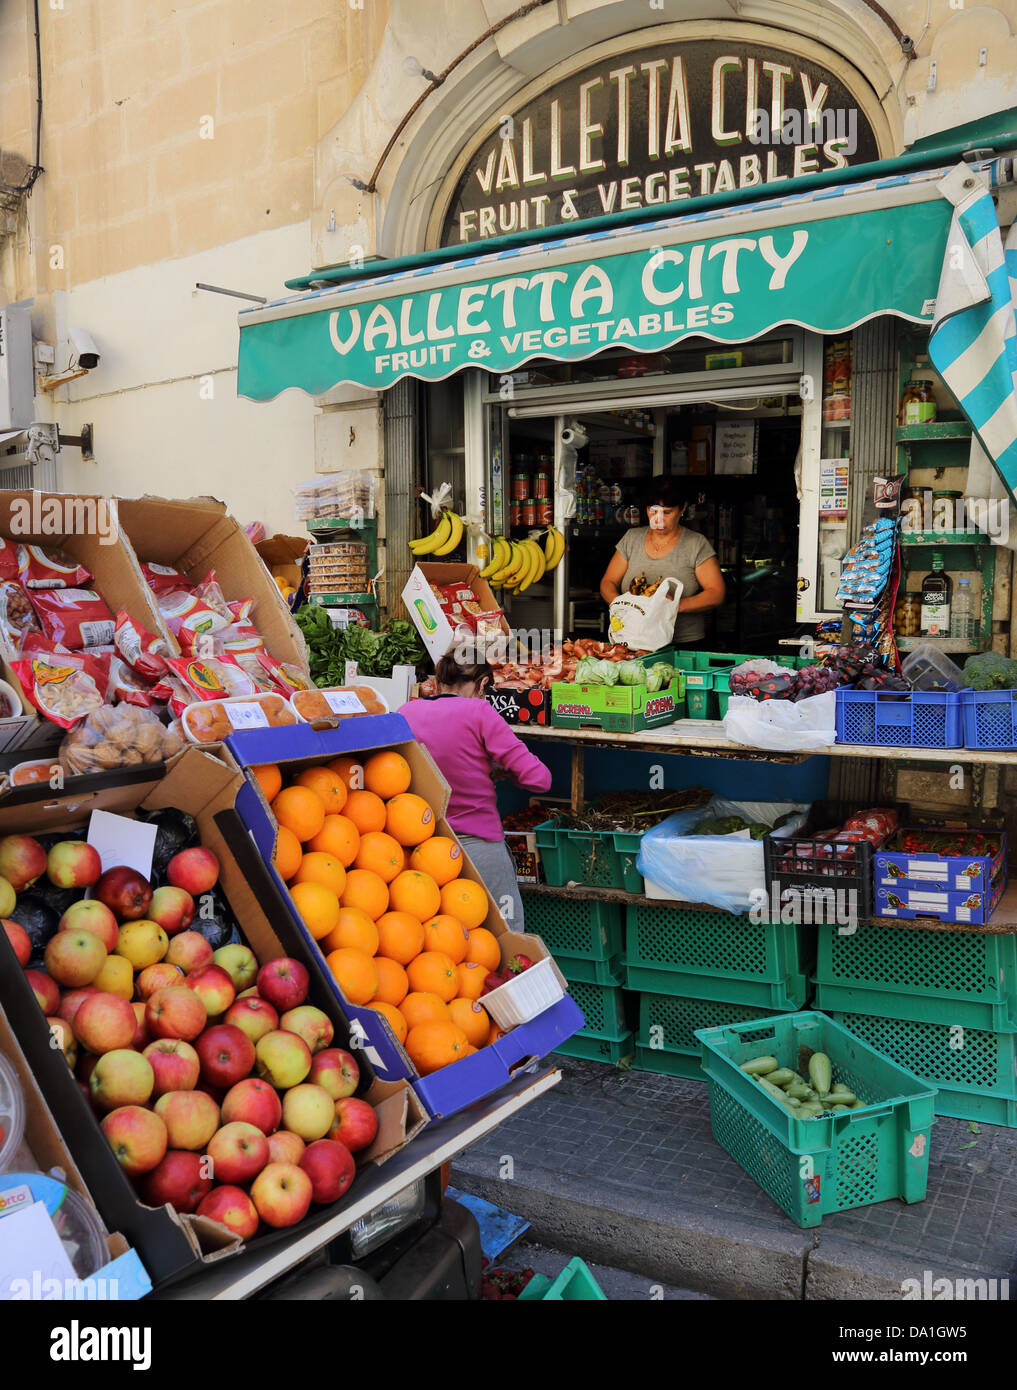 FRESH FRUIT & VEGETABLE SHOP,VALLETTA,MALTA Stock Photo